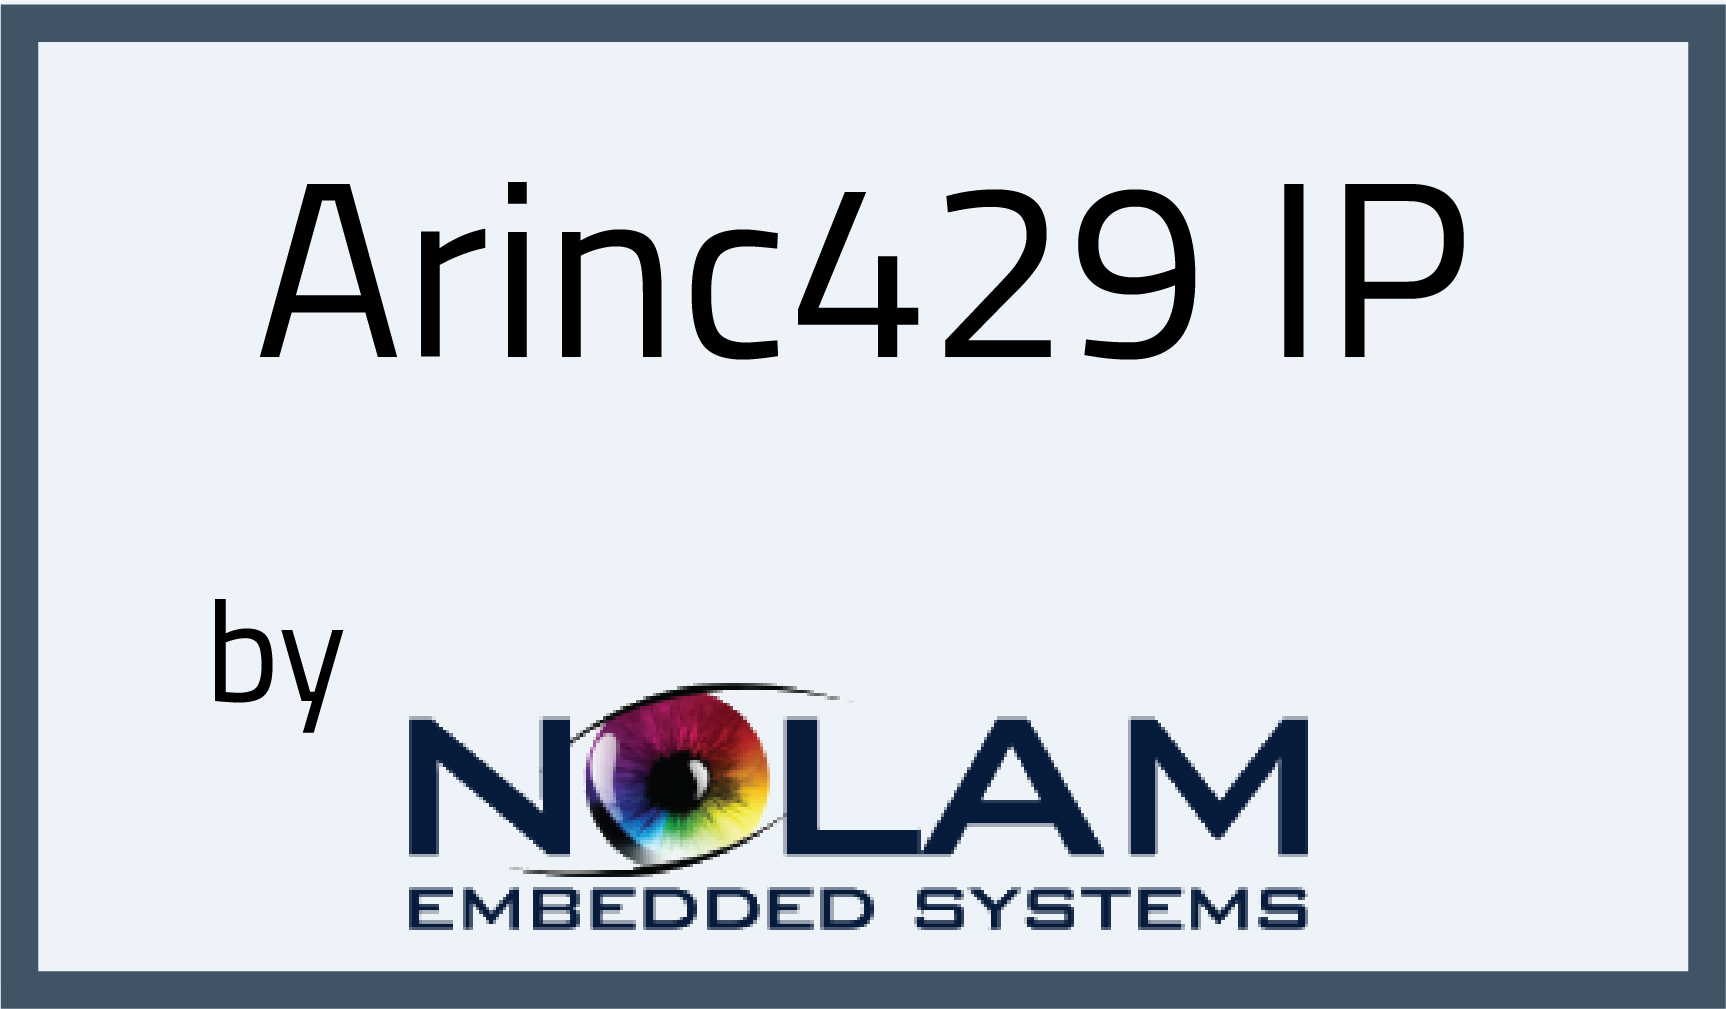 Arinc429 IP